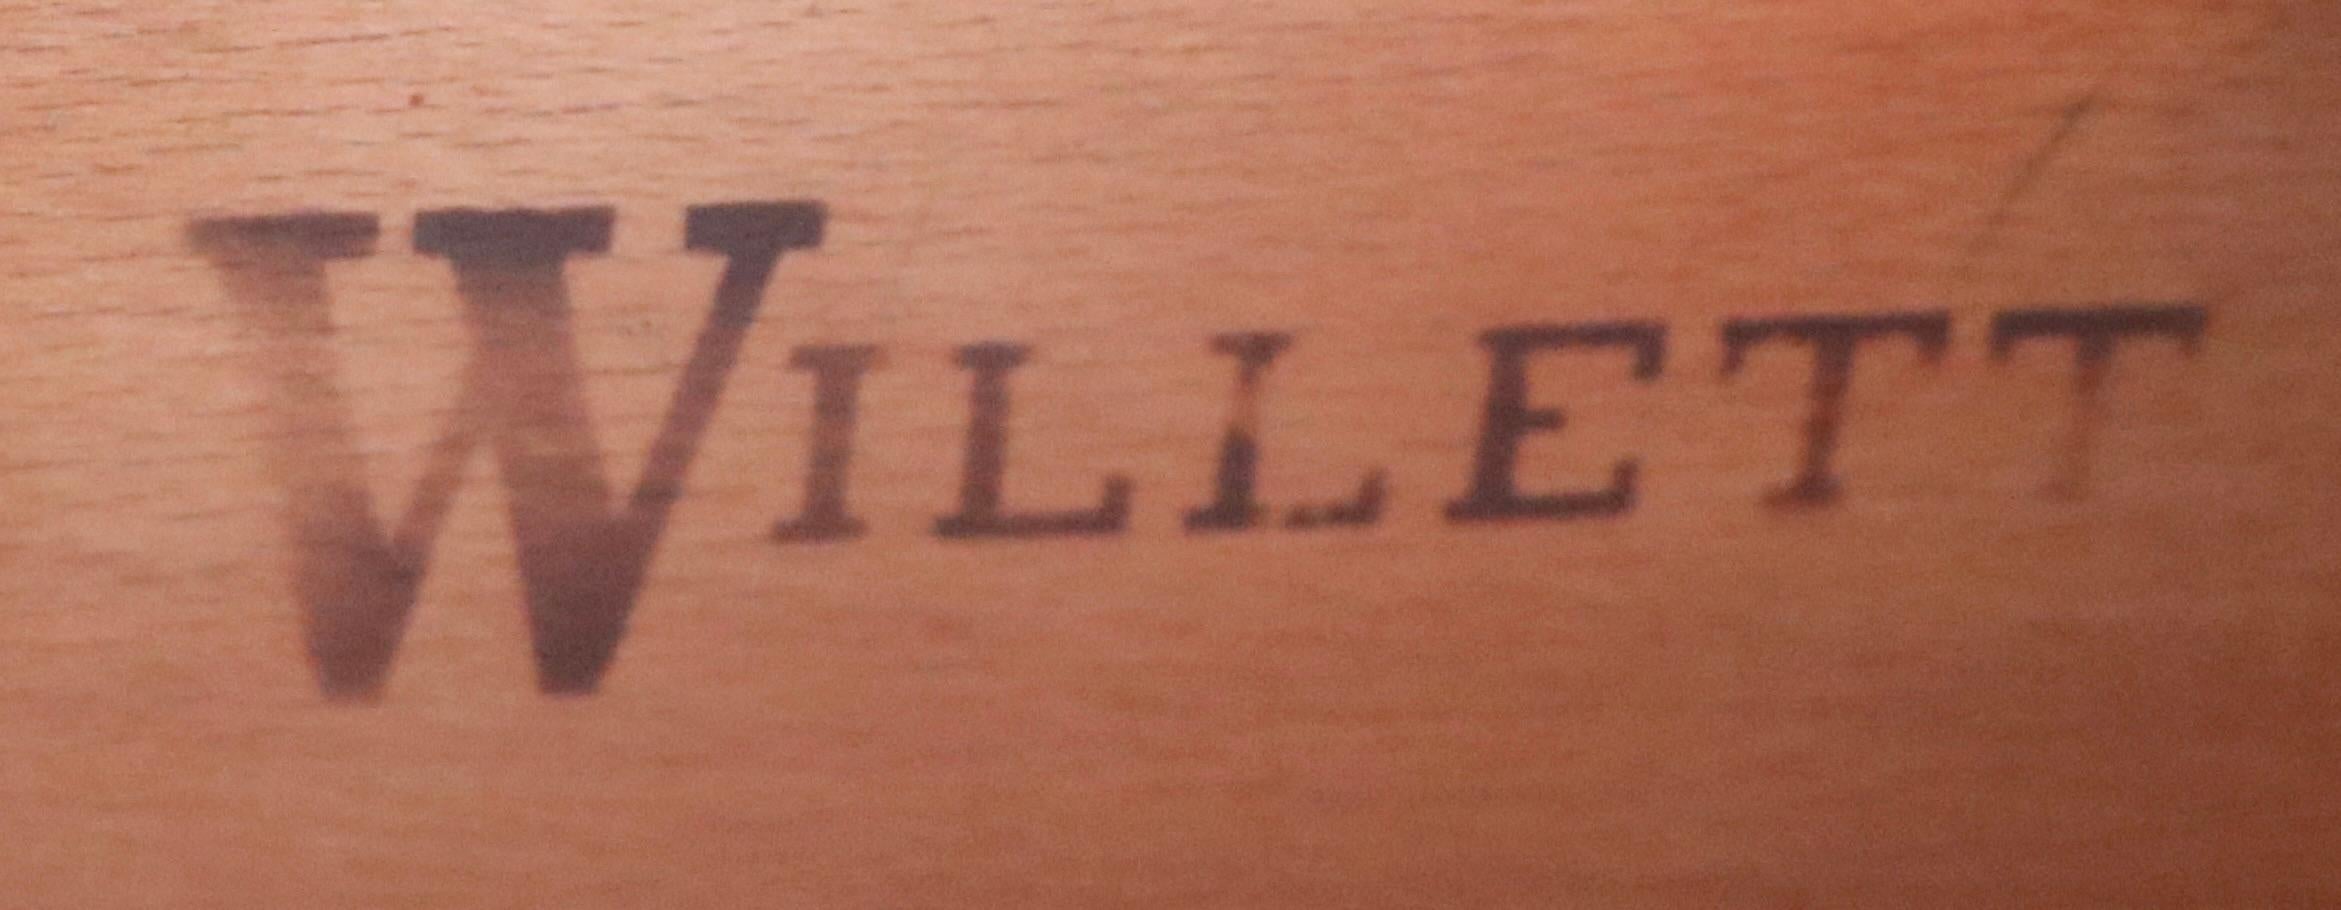 willett furniture history